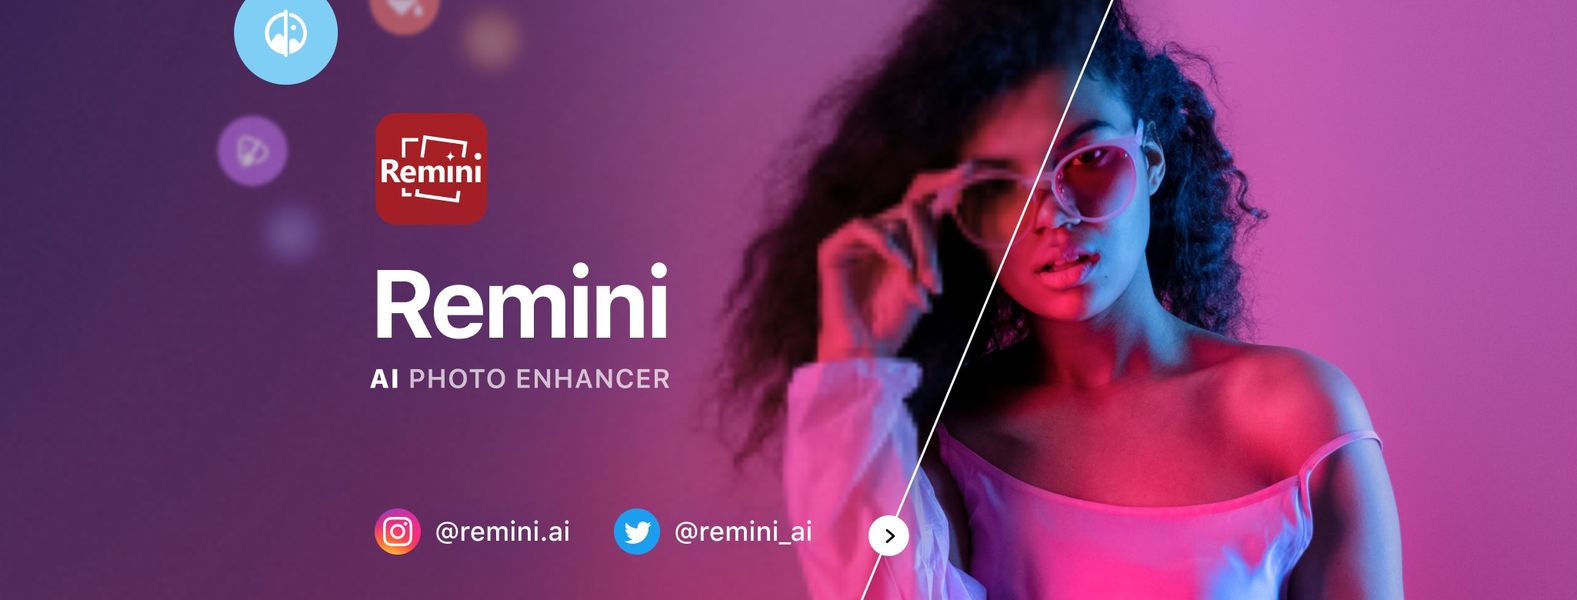 Top 5 Alternatives to the Popular Remini App for Image Enhancer